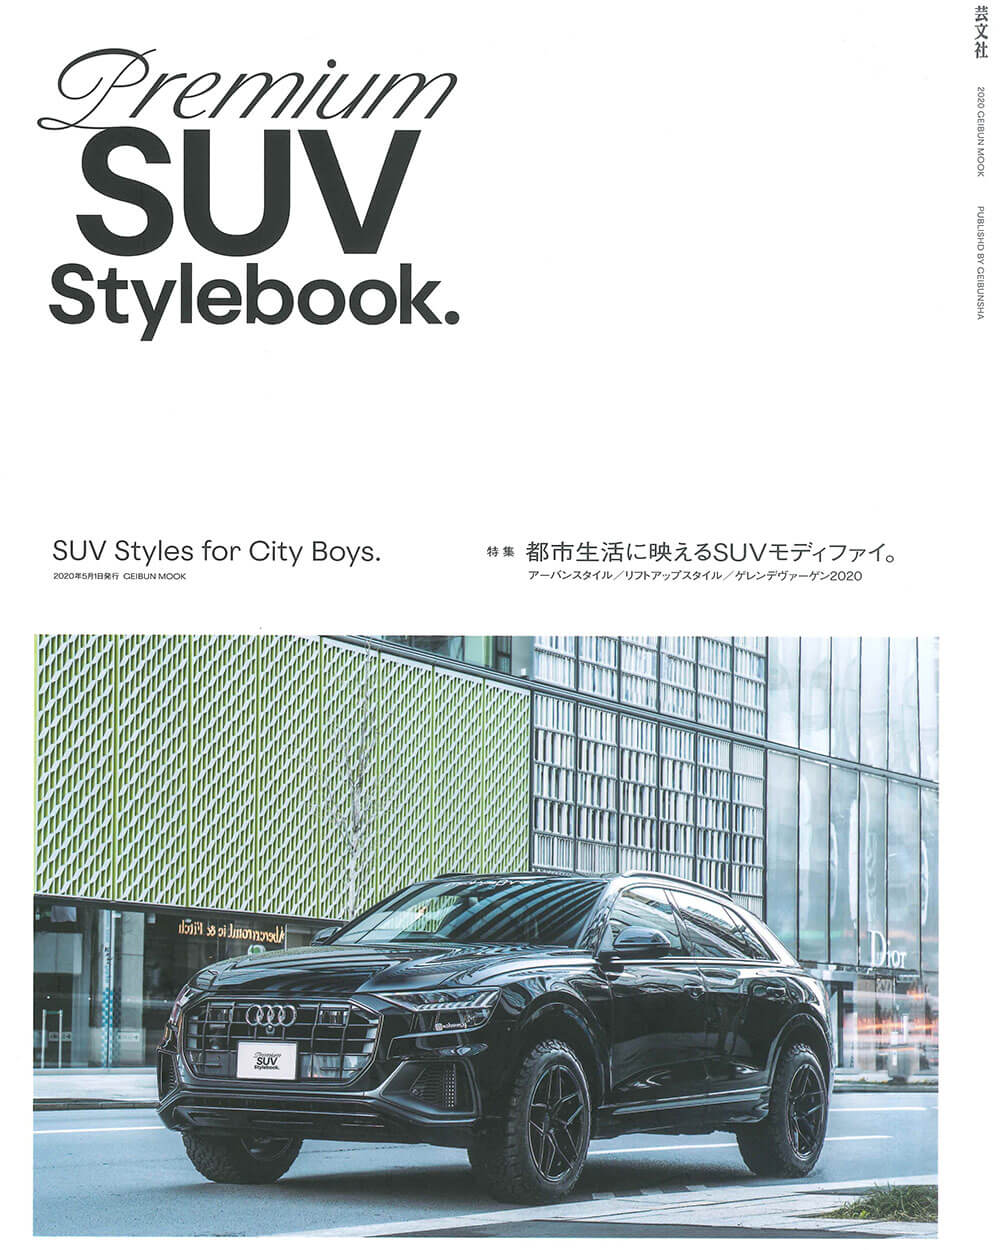 Premium SUV Stylebook.